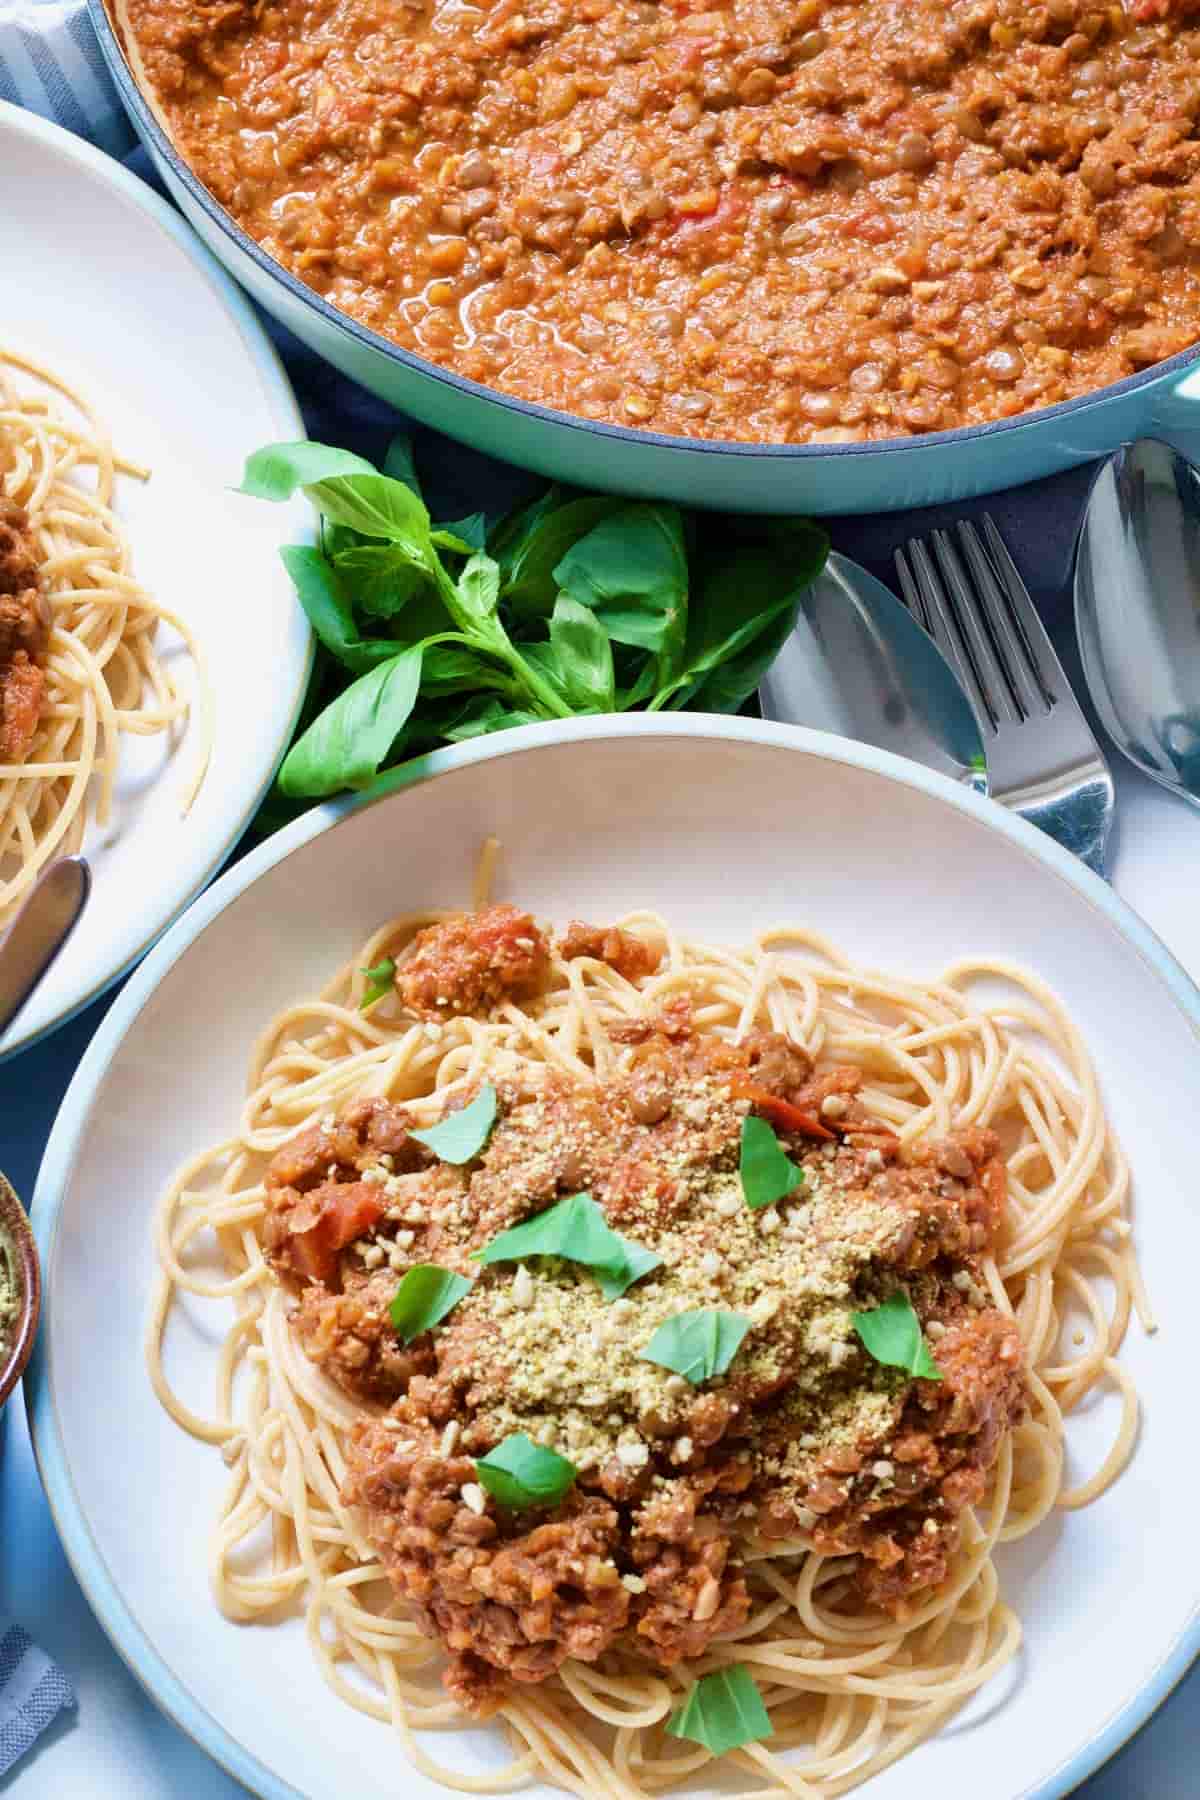 Lentil ragu over spaghetti with vegan parmesan and basil.